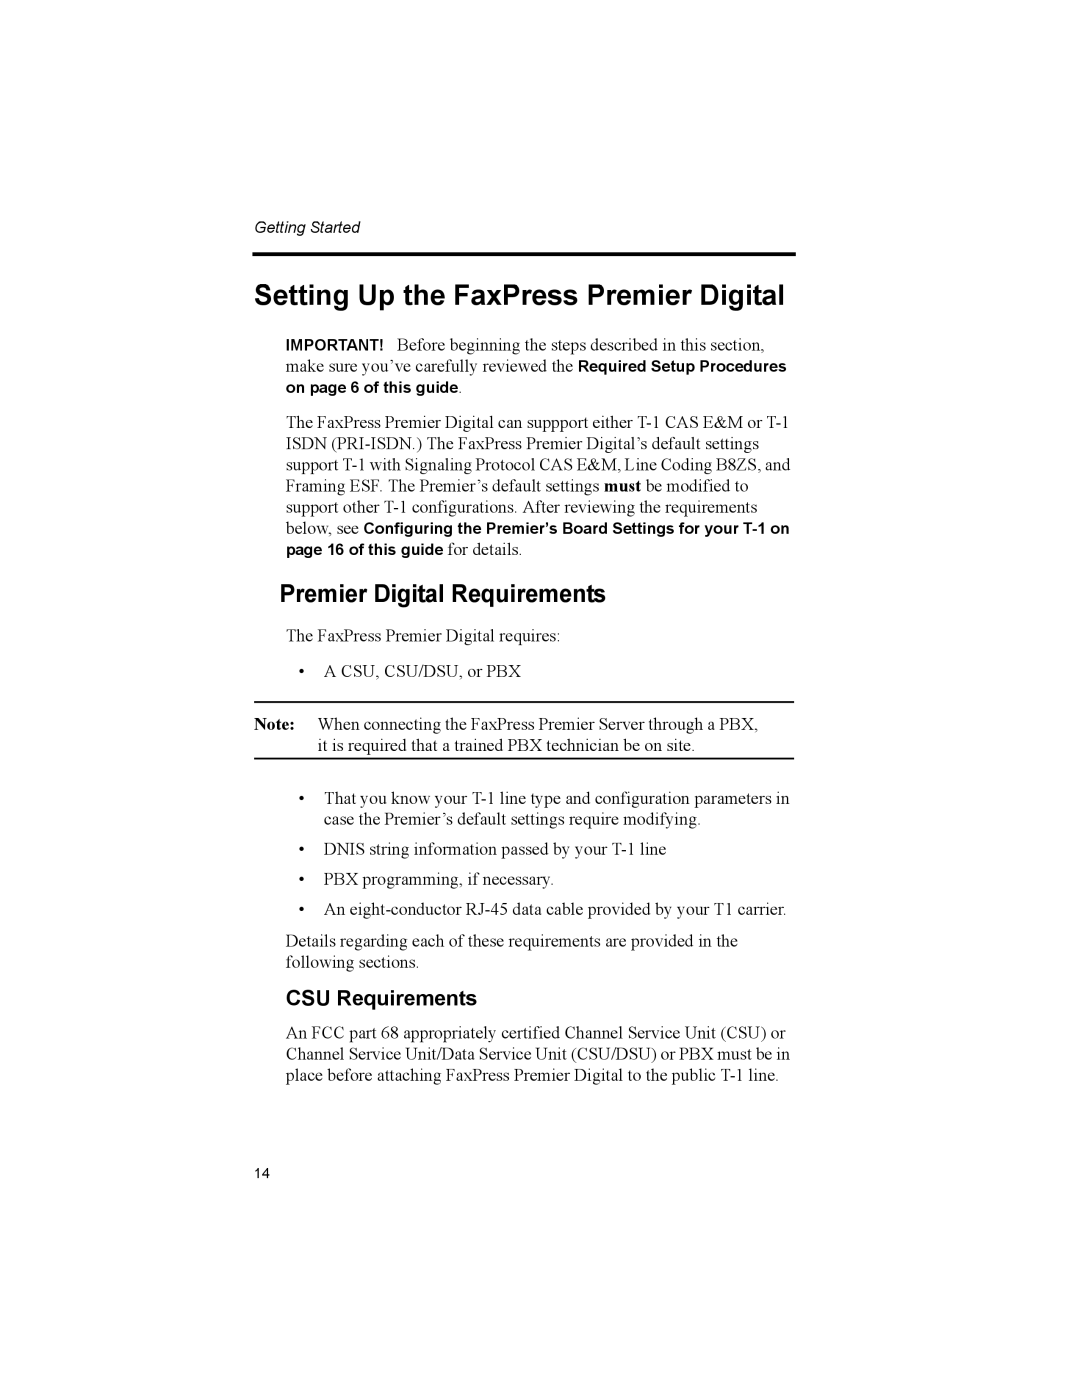 Castelle 61-1260-001A manual Setting Up the FaxPress Premier Digital, Premier Digital Requirements, CSU Requirements 